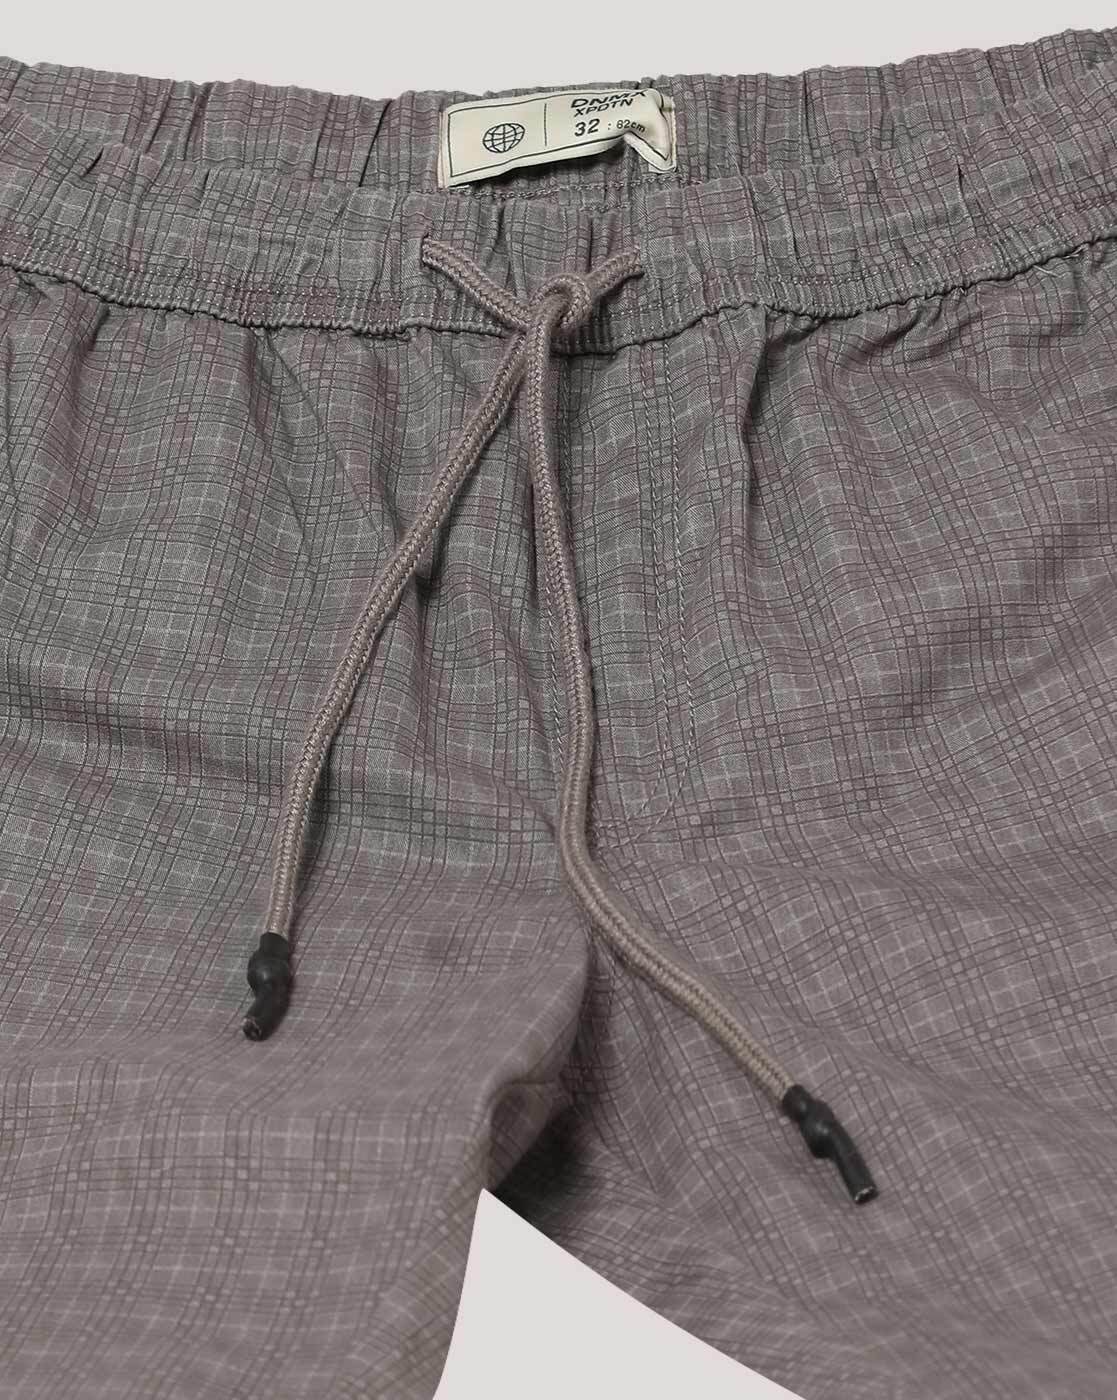 Buy Grey Track Pants for Men by DNMX Online